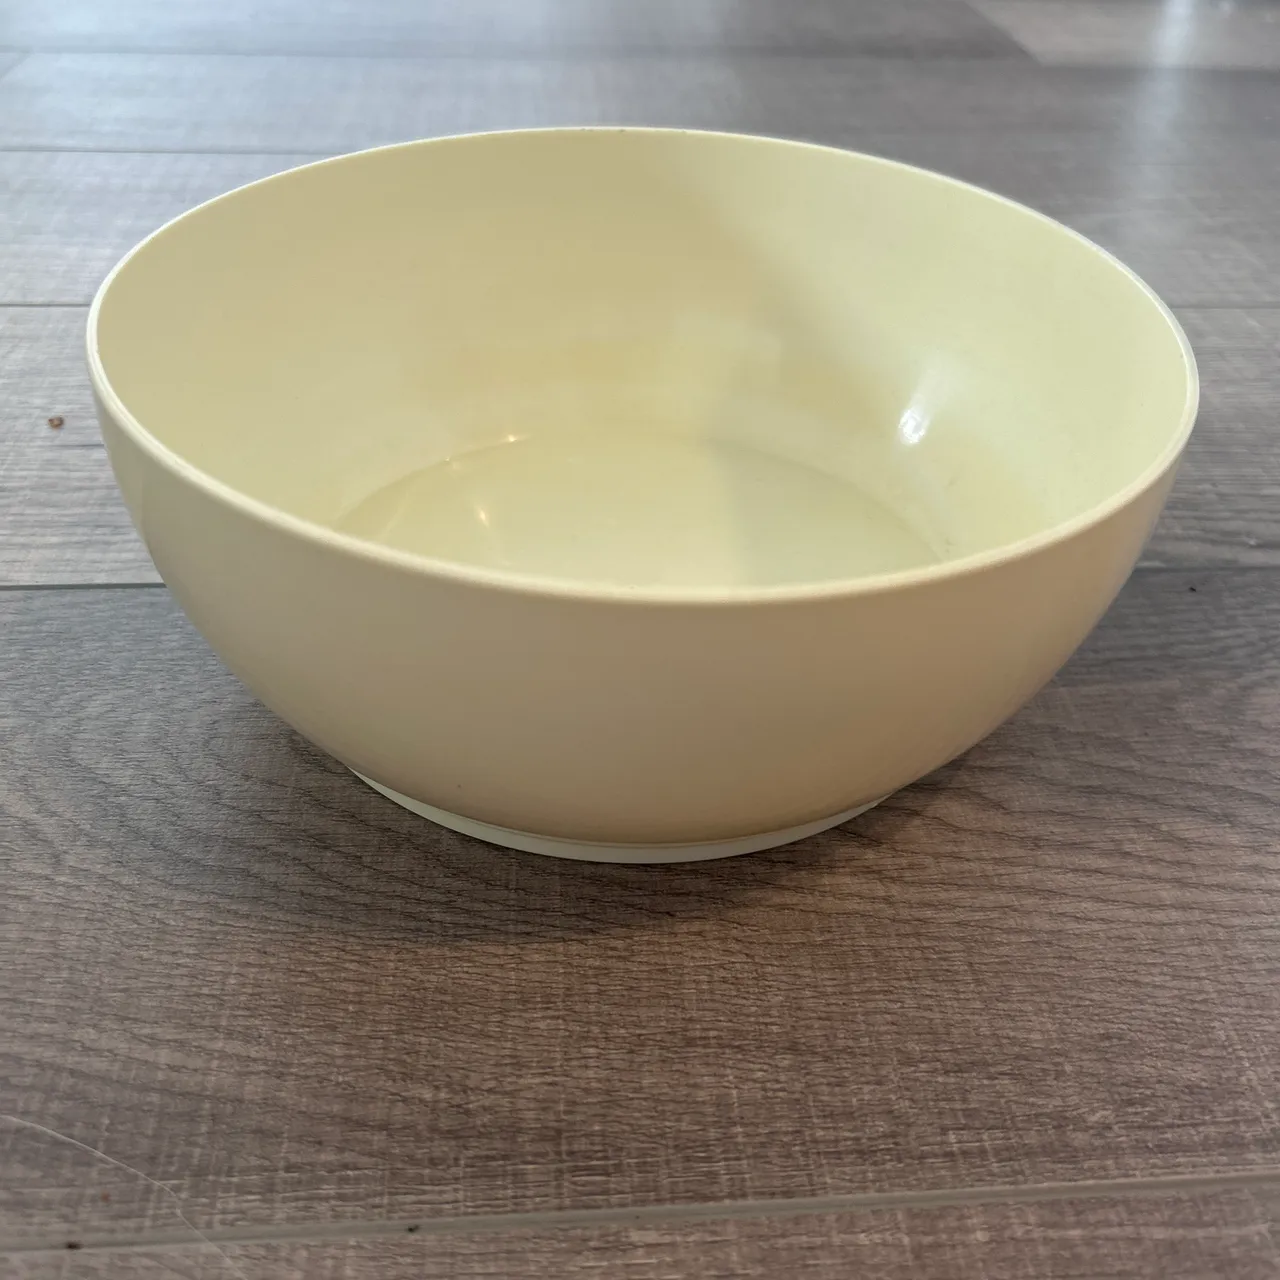 Plastic bowl photo 1